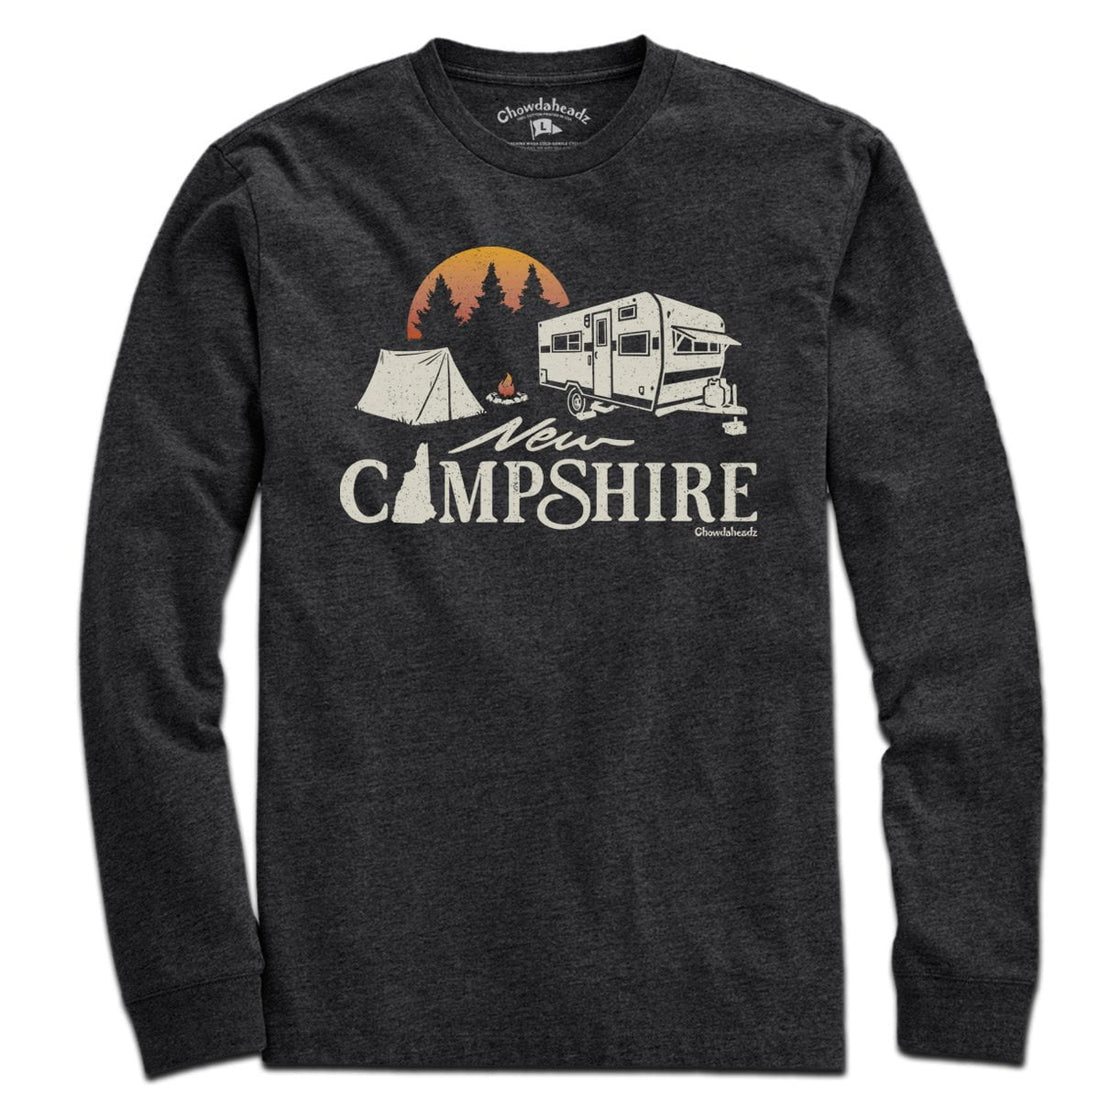 New Campshire T-Shirt - Chowdaheadz